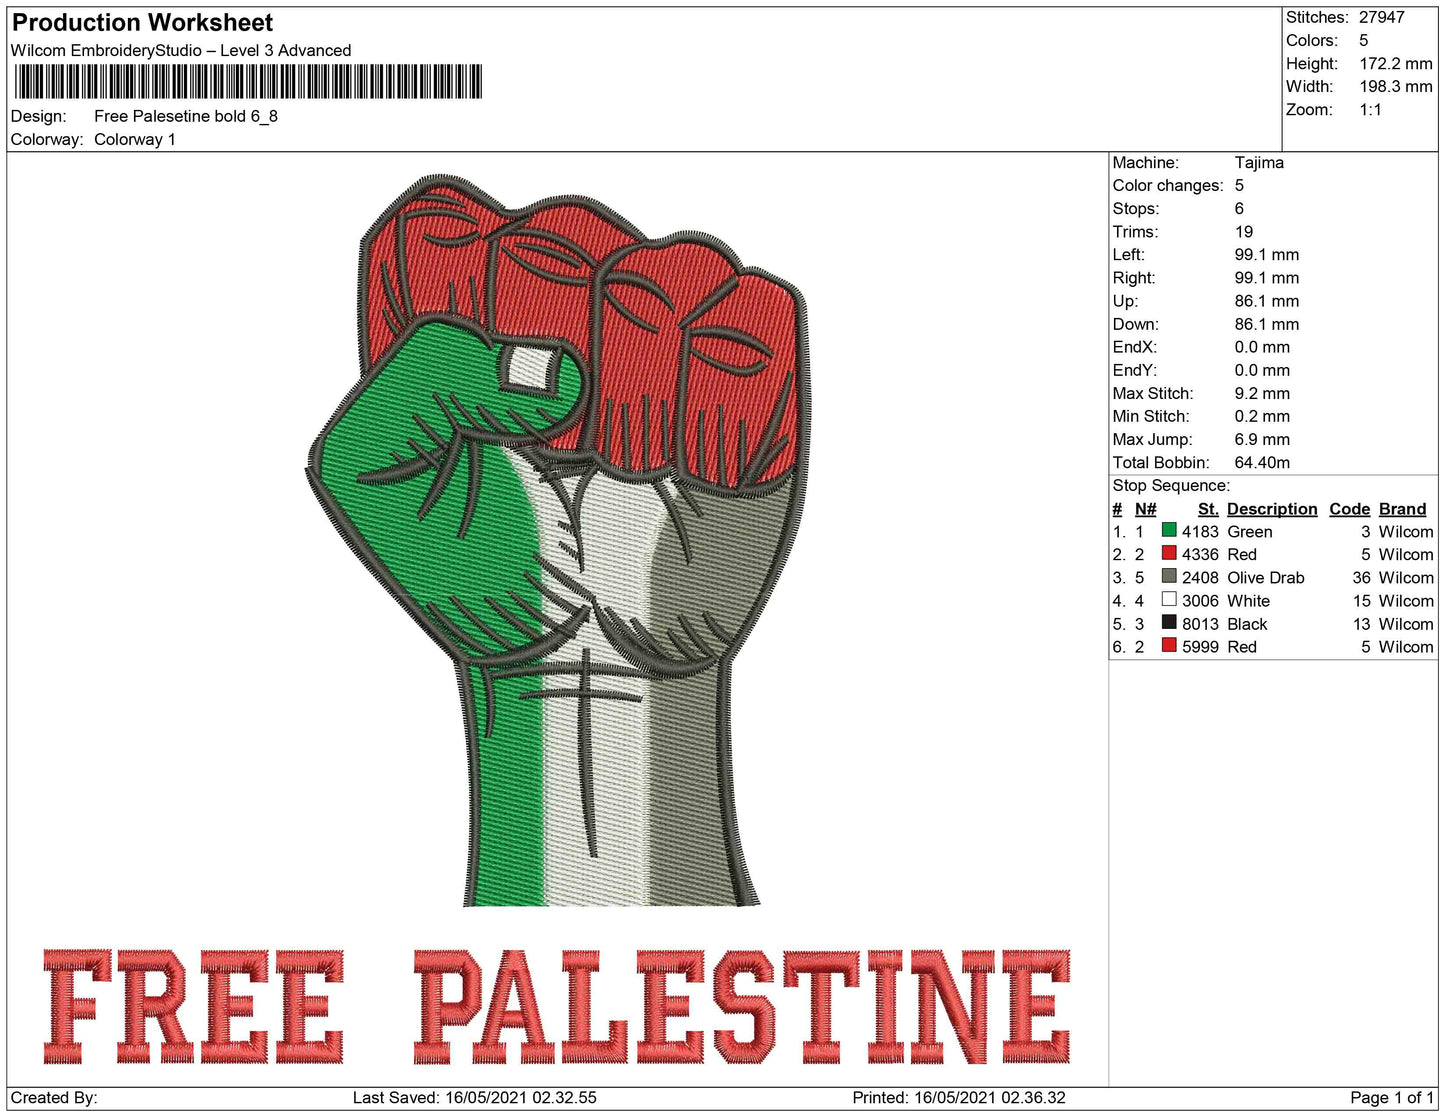 Free Palestine bold